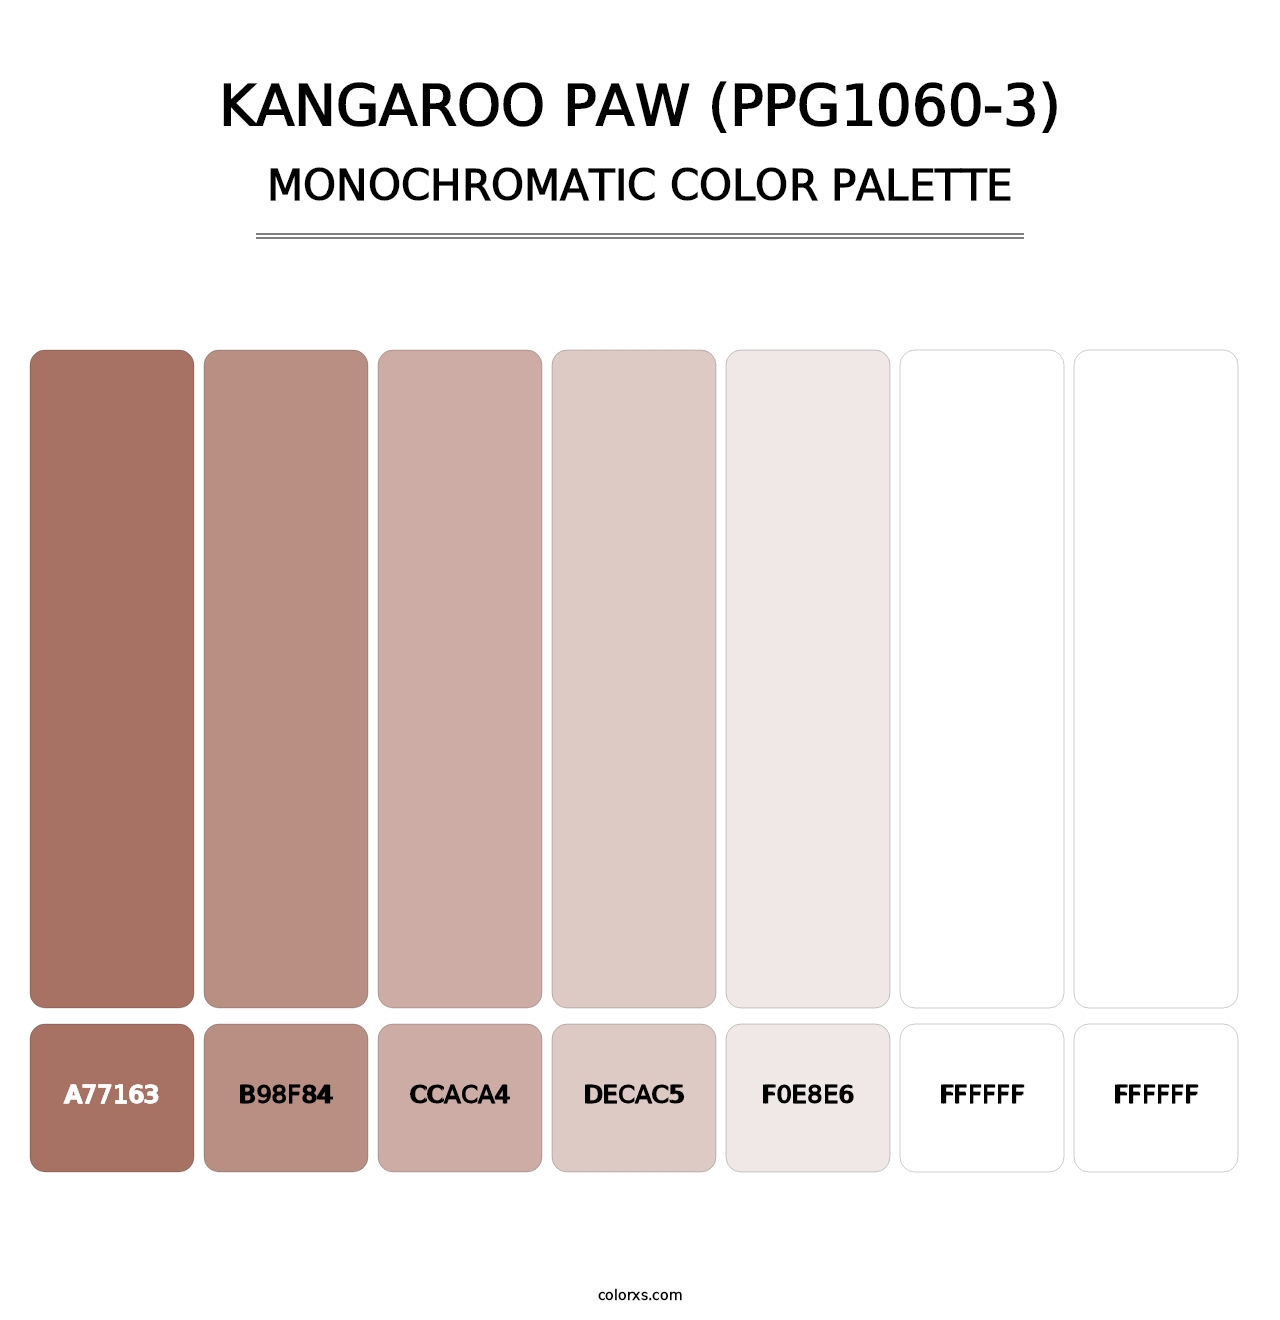 Kangaroo Paw (PPG1060-3) - Monochromatic Color Palette